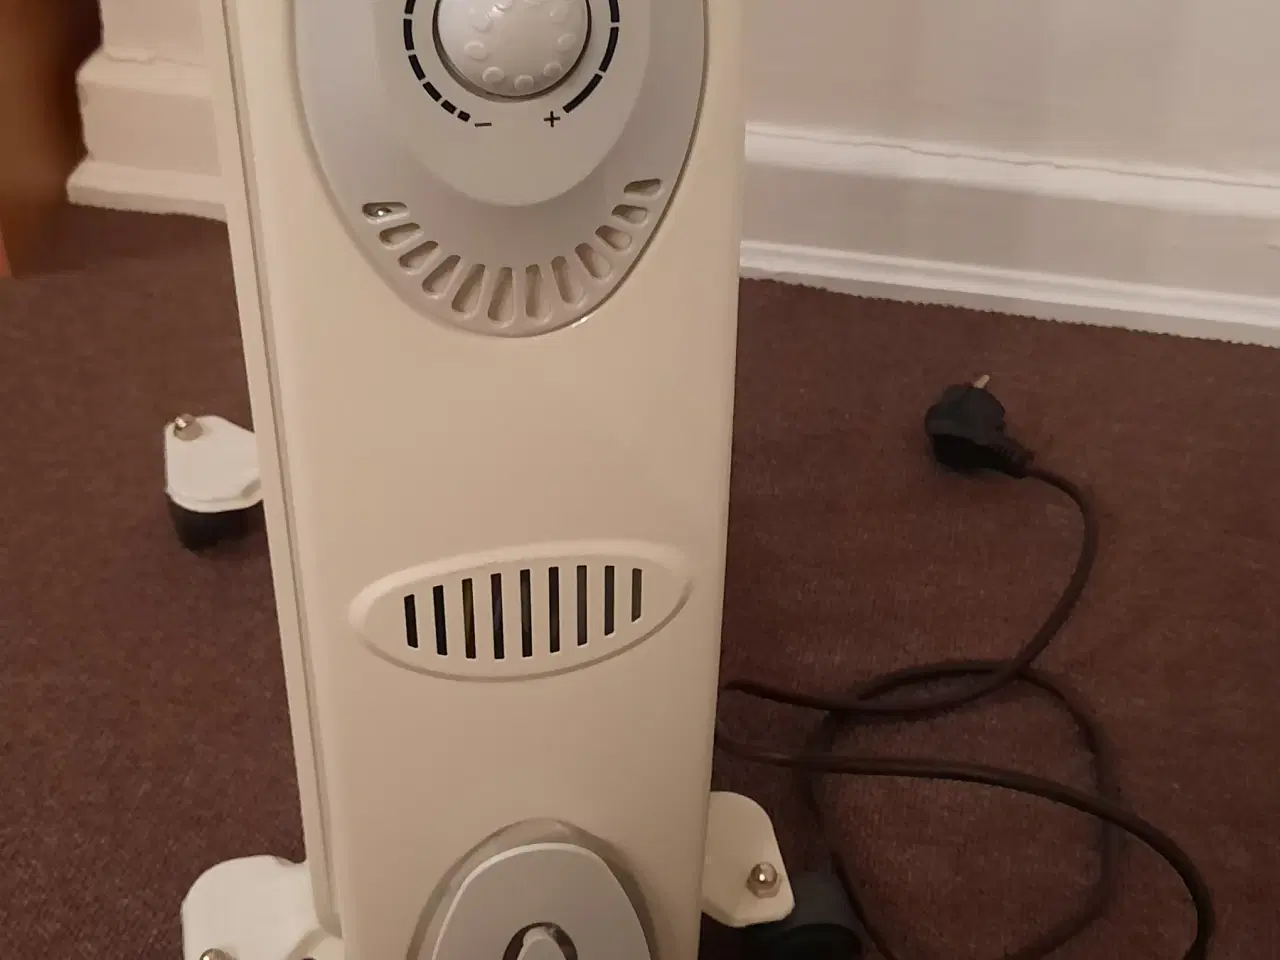 Billede 2 - El radiator 